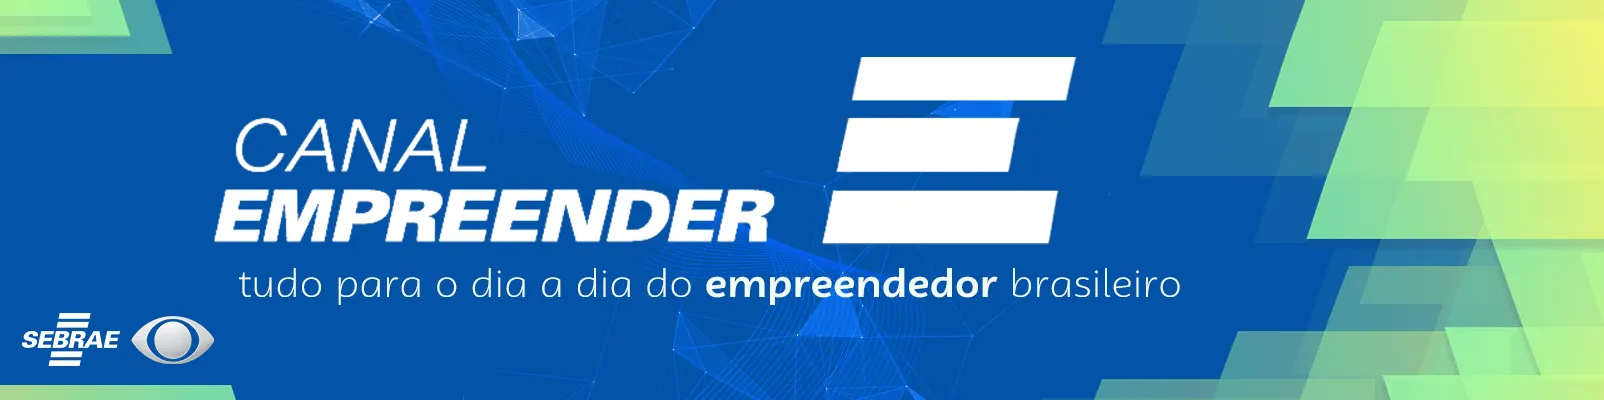 Canal Empreender - tudo para o dia a dia do empreendedor brasileiro